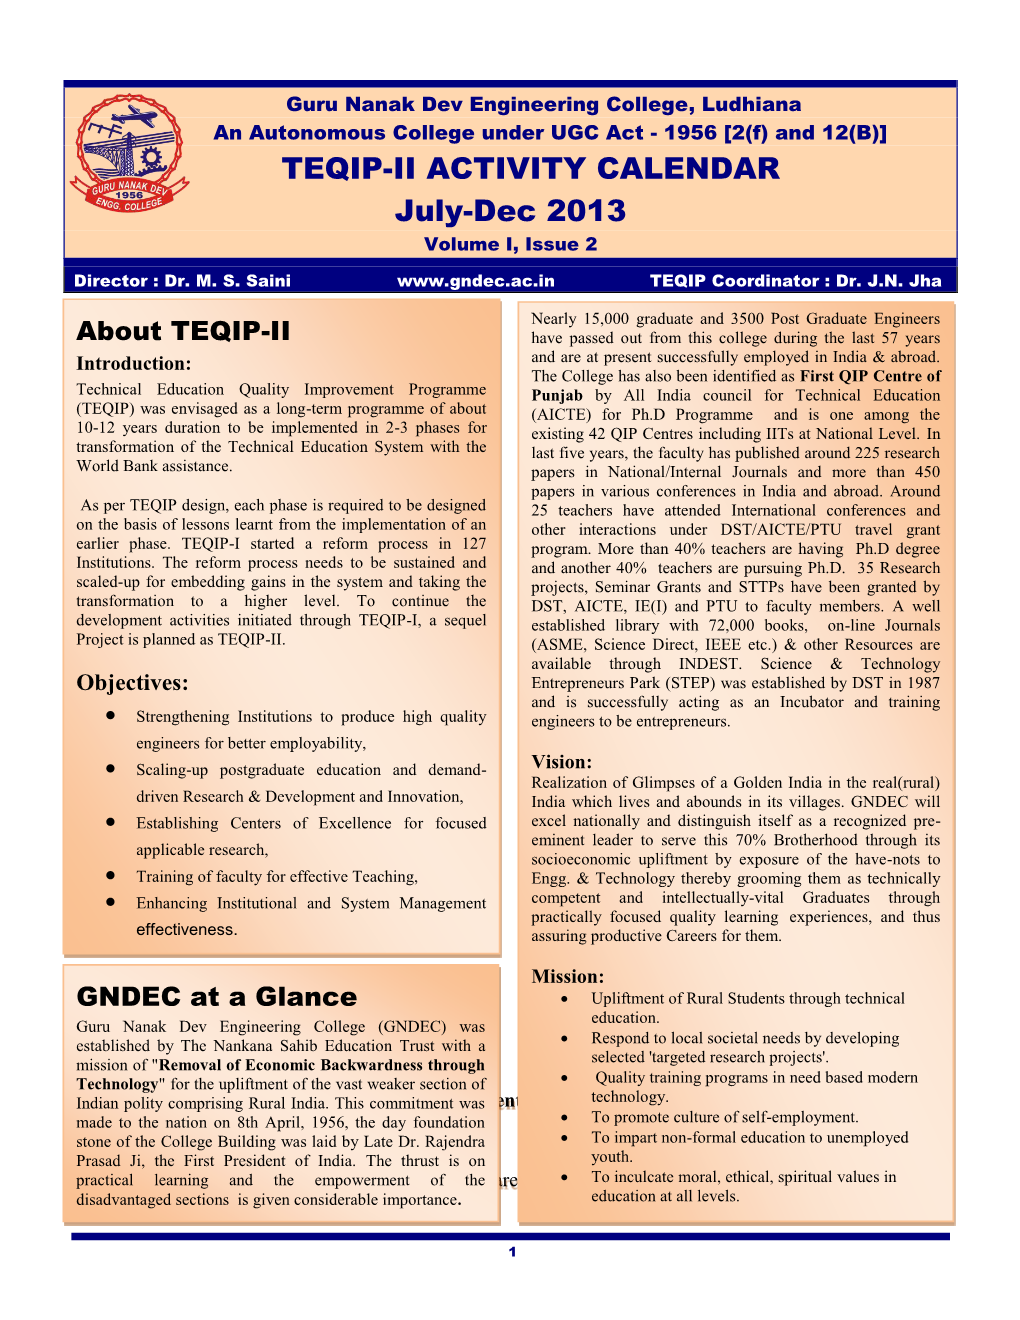 TEQIP-II ACTIVITY CALENDAR July-Dec 2013 Volume I, Issue 2